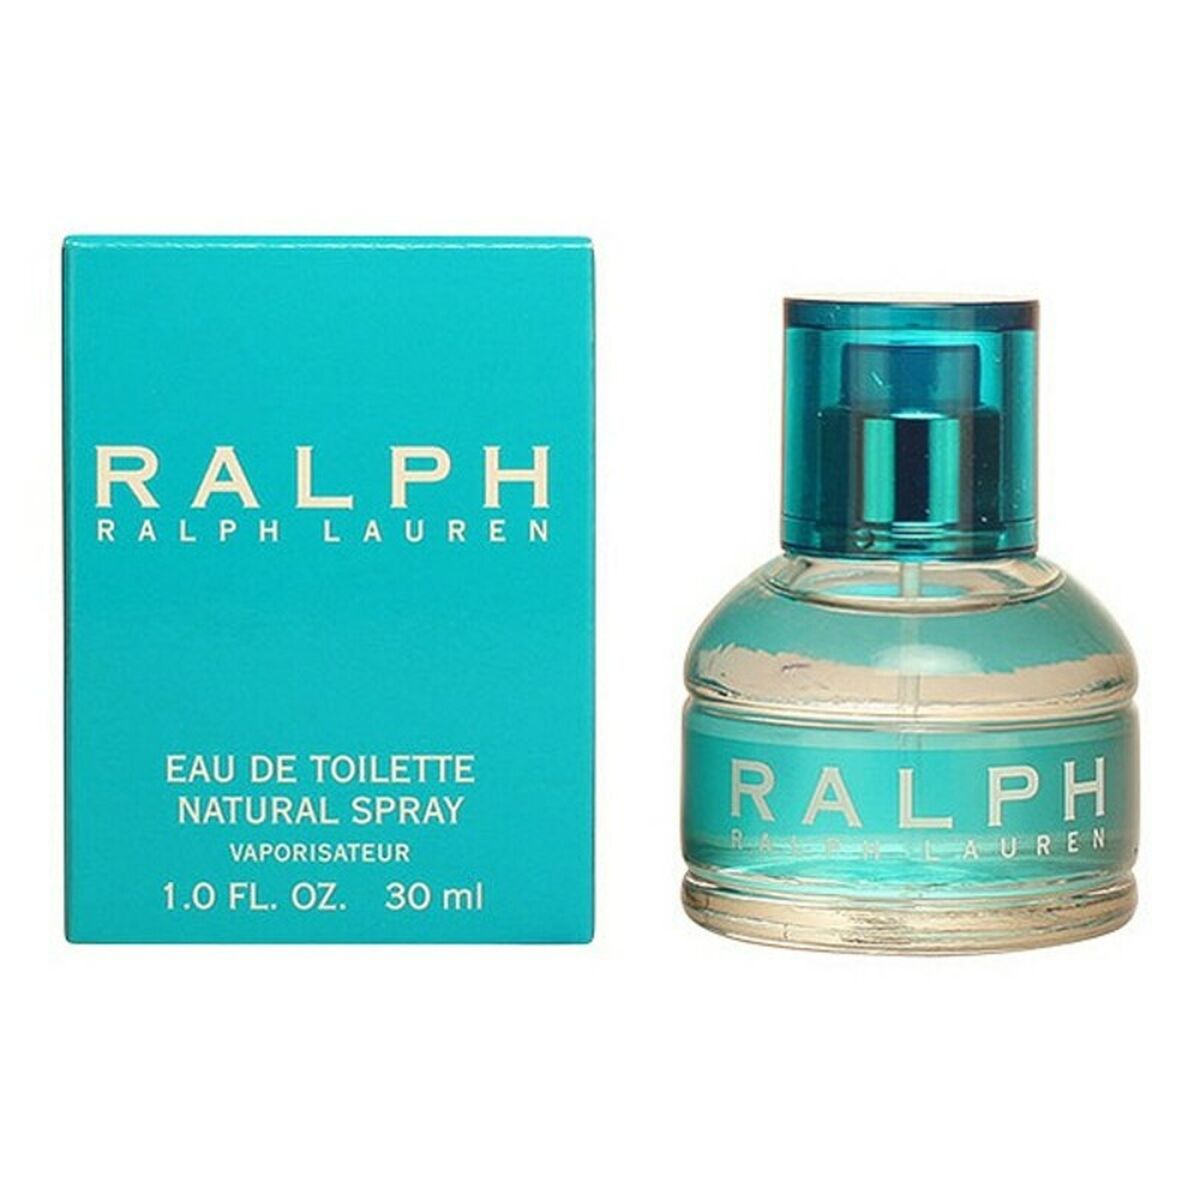 Perfume des femmes Ralph Lauren EDT